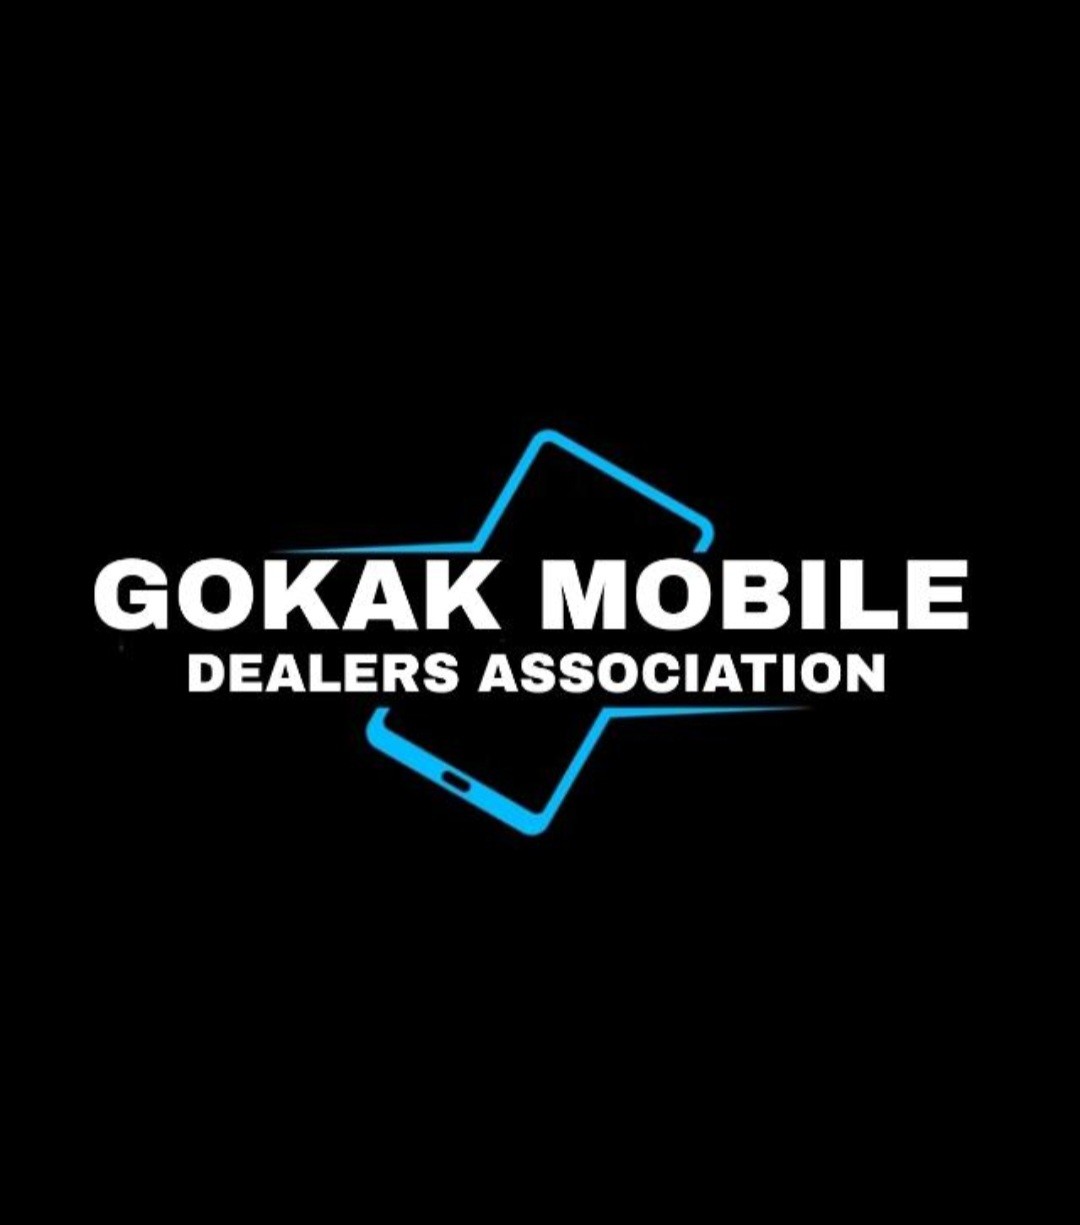 GOKAK MOBILE DEALERS ASSOCIATION TOURNAMENT